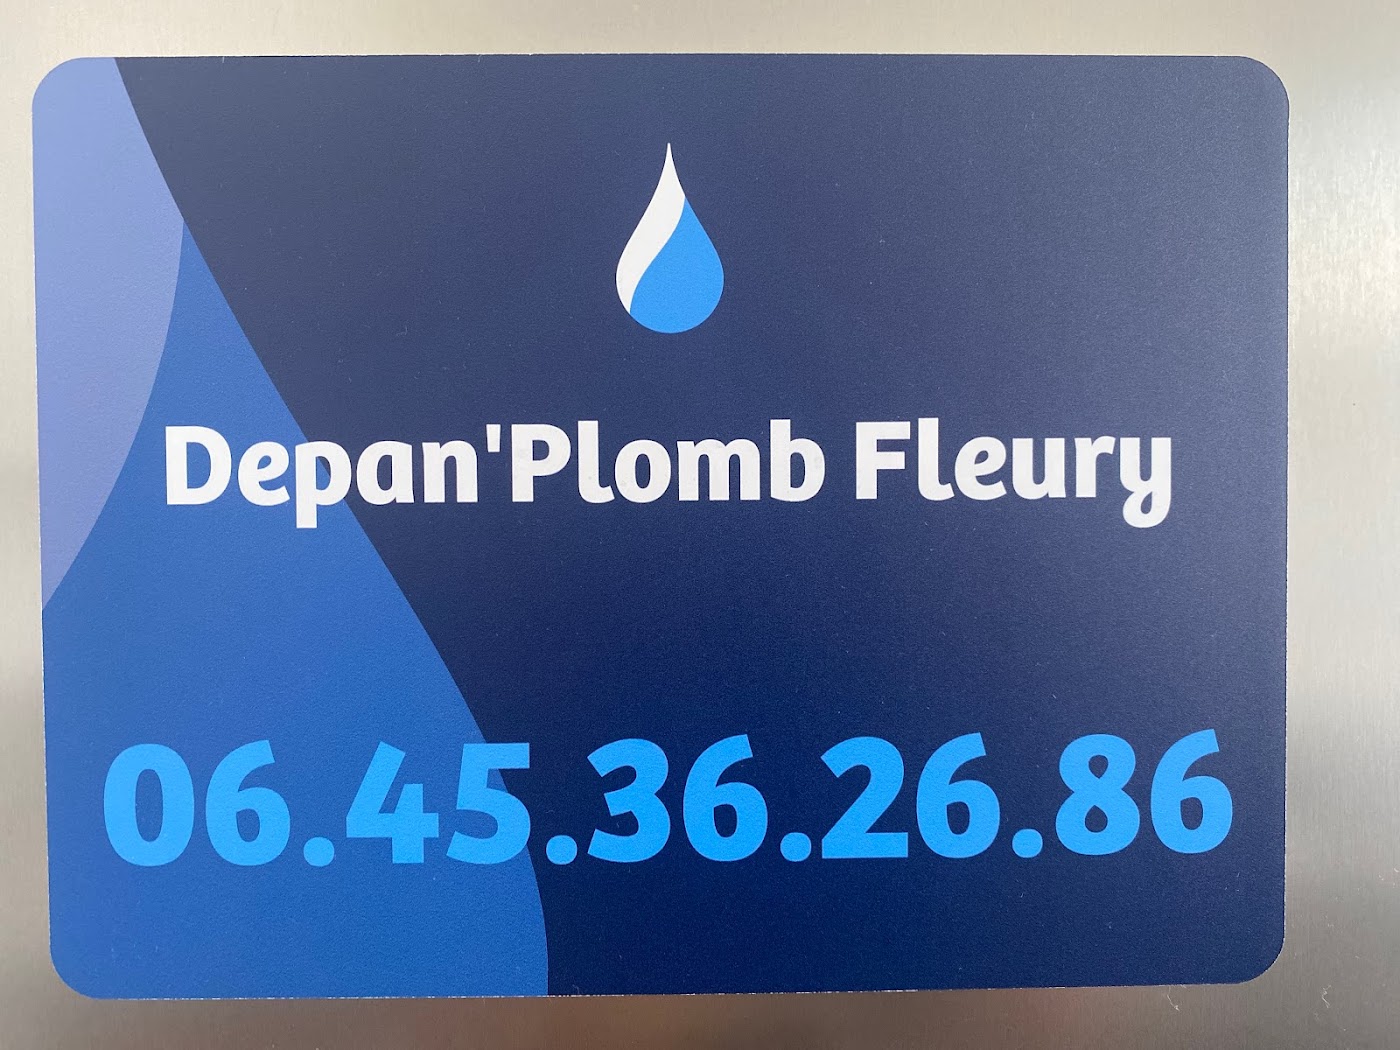 Depan'Plomb Fleury